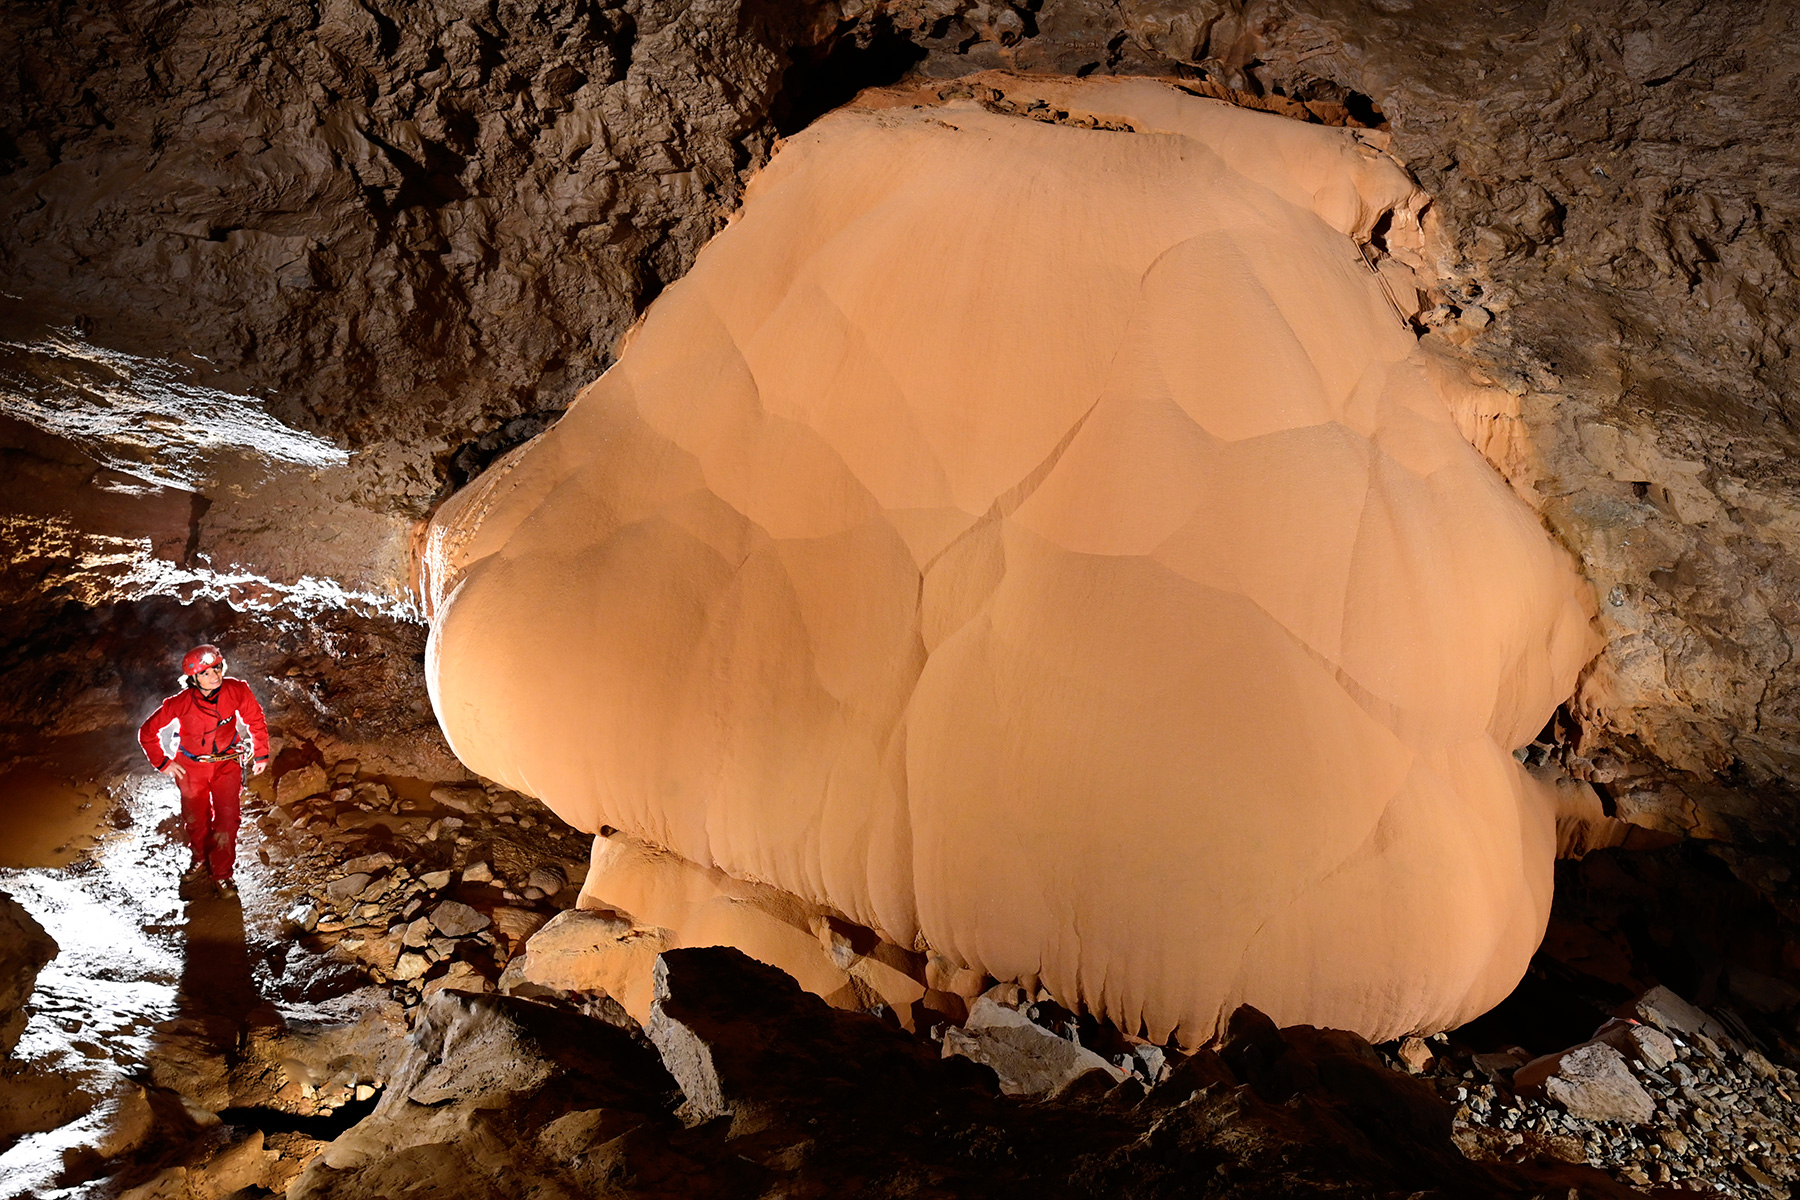 Gouffre de Cabrespine (Aude) - Grande coulée de calcite orange